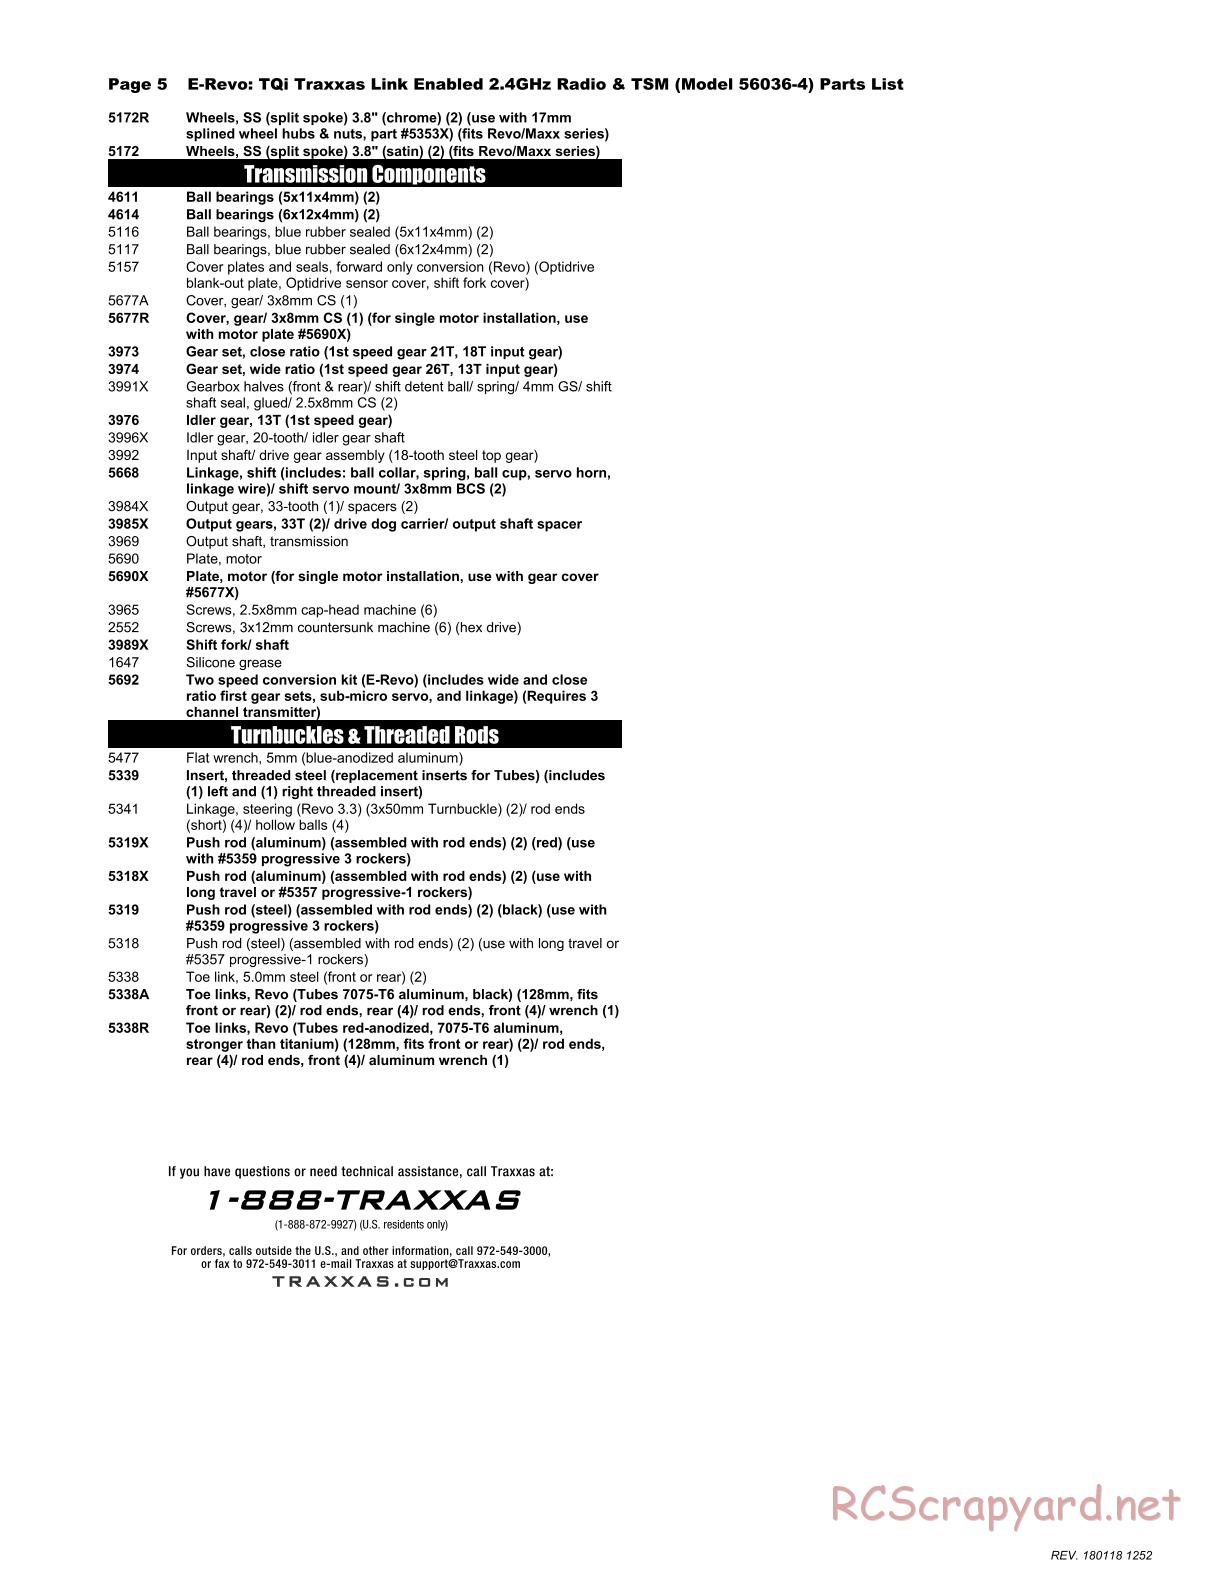 Traxxas - E-Revo TSM (2016) - Parts List - Page 5